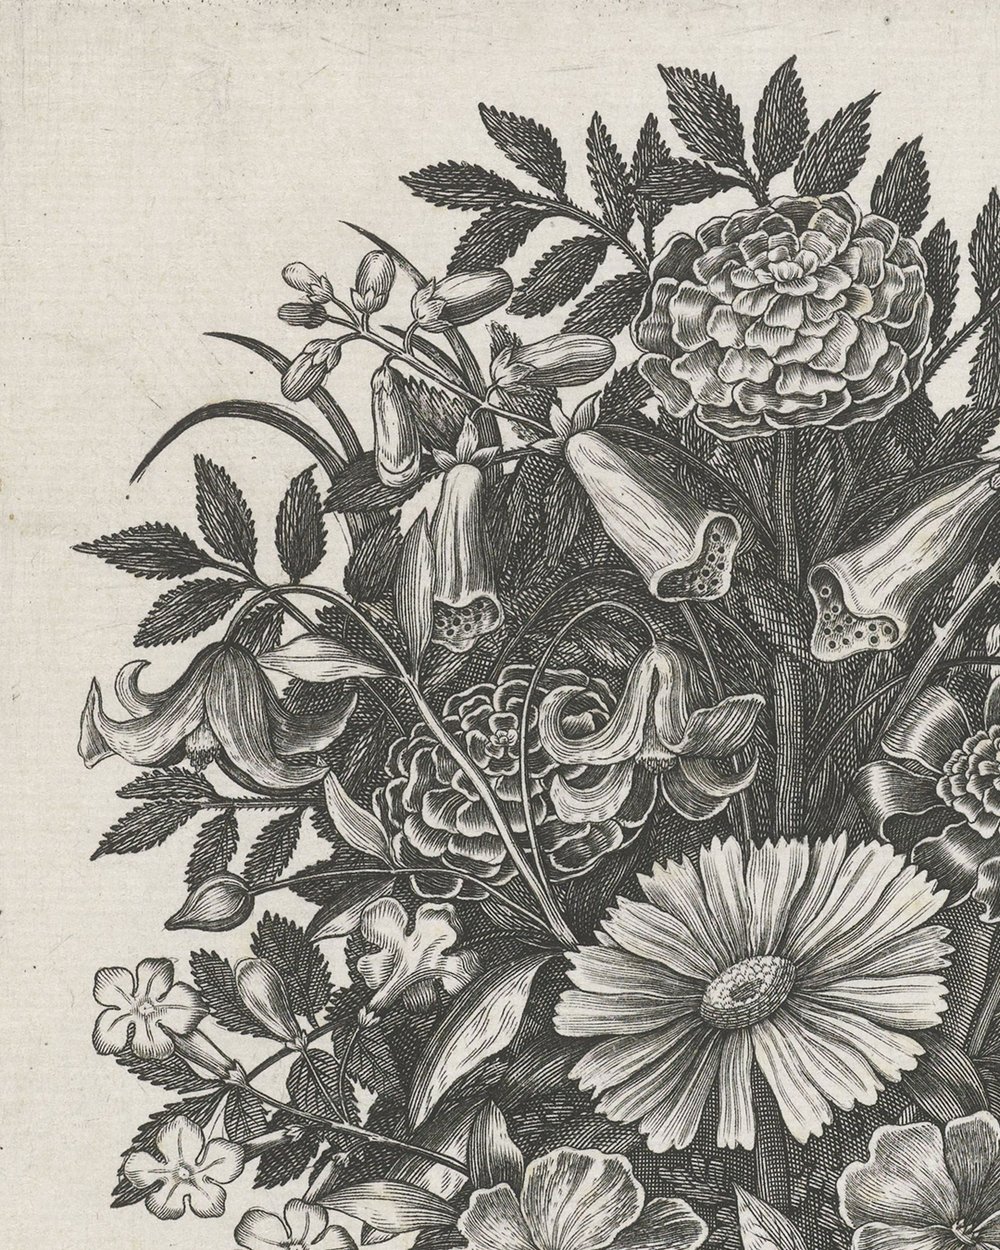 ''Grotesque vase with three mascarons'' (1500 - 1600)